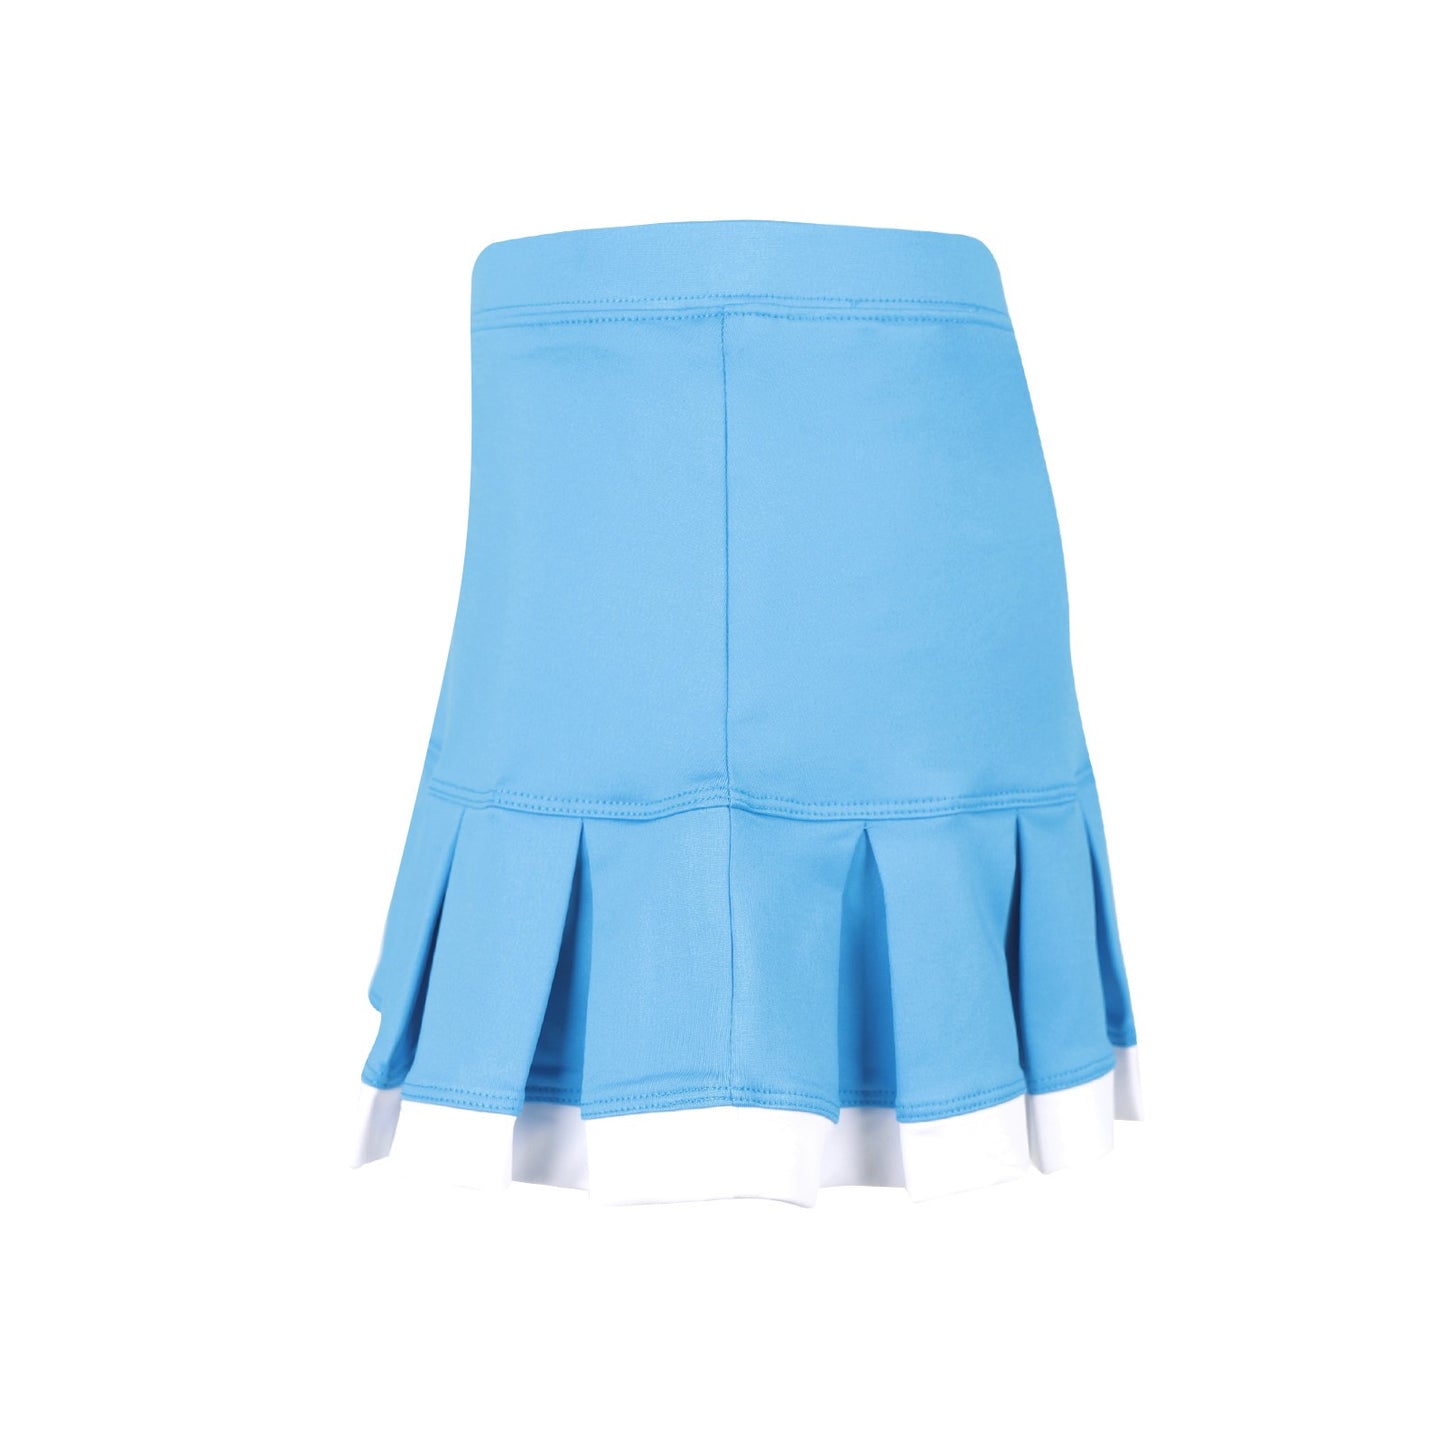 #Moroccan Morning Aqua Skirt - New!